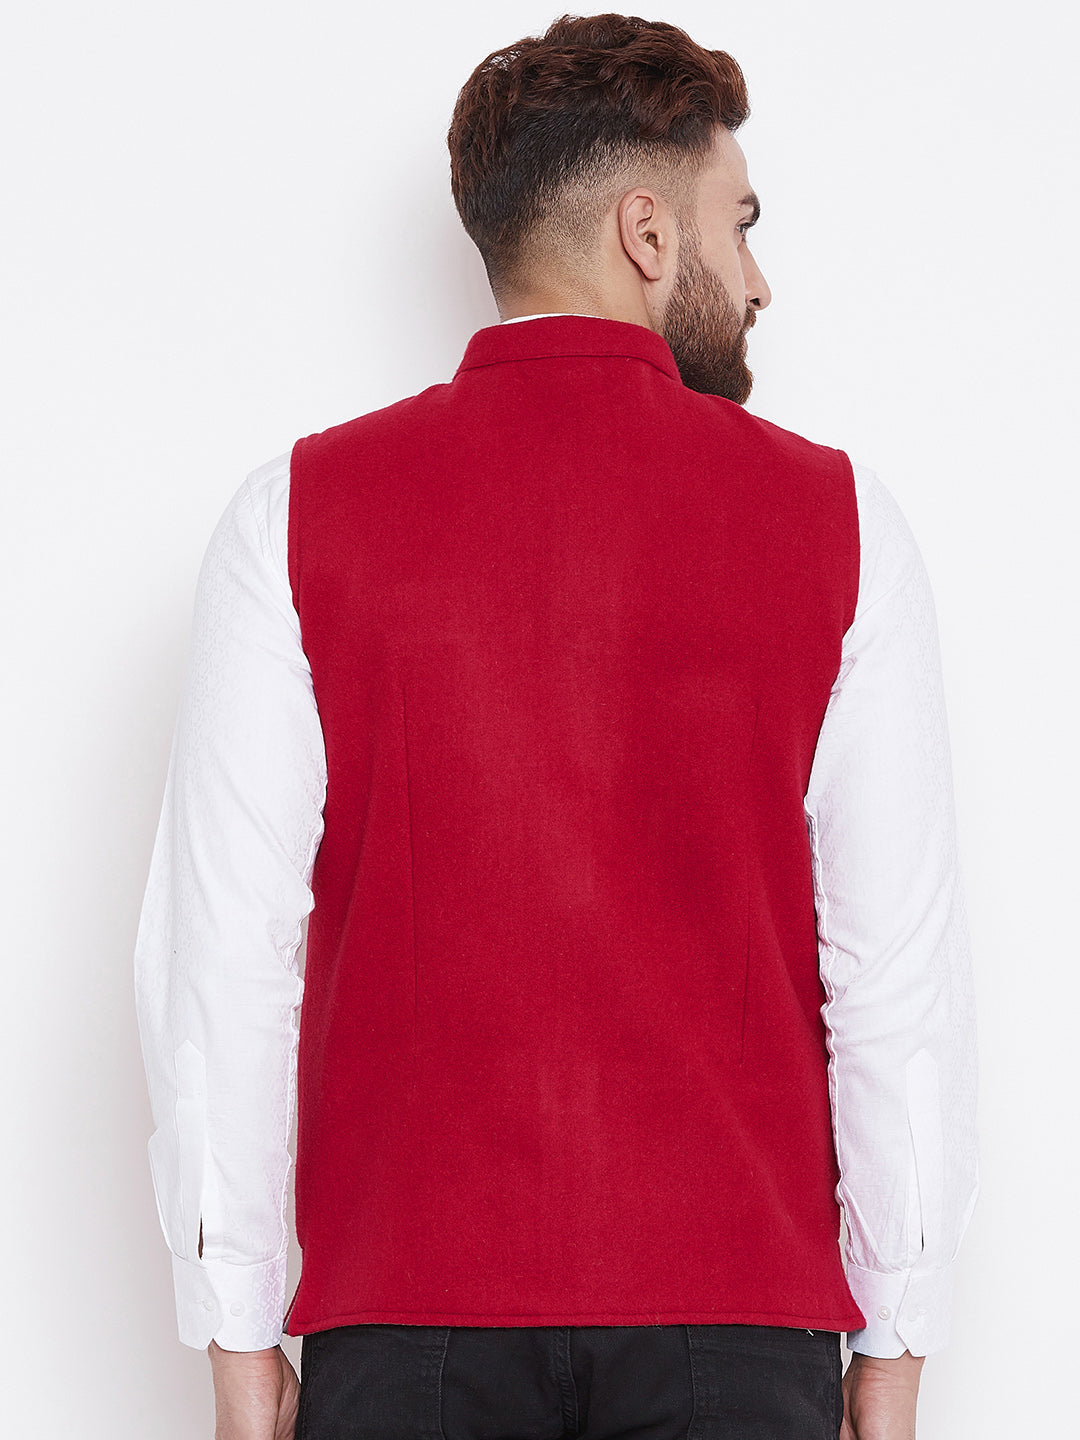 Men's Pure Wool Red Nehru Jacket - Even Apparels